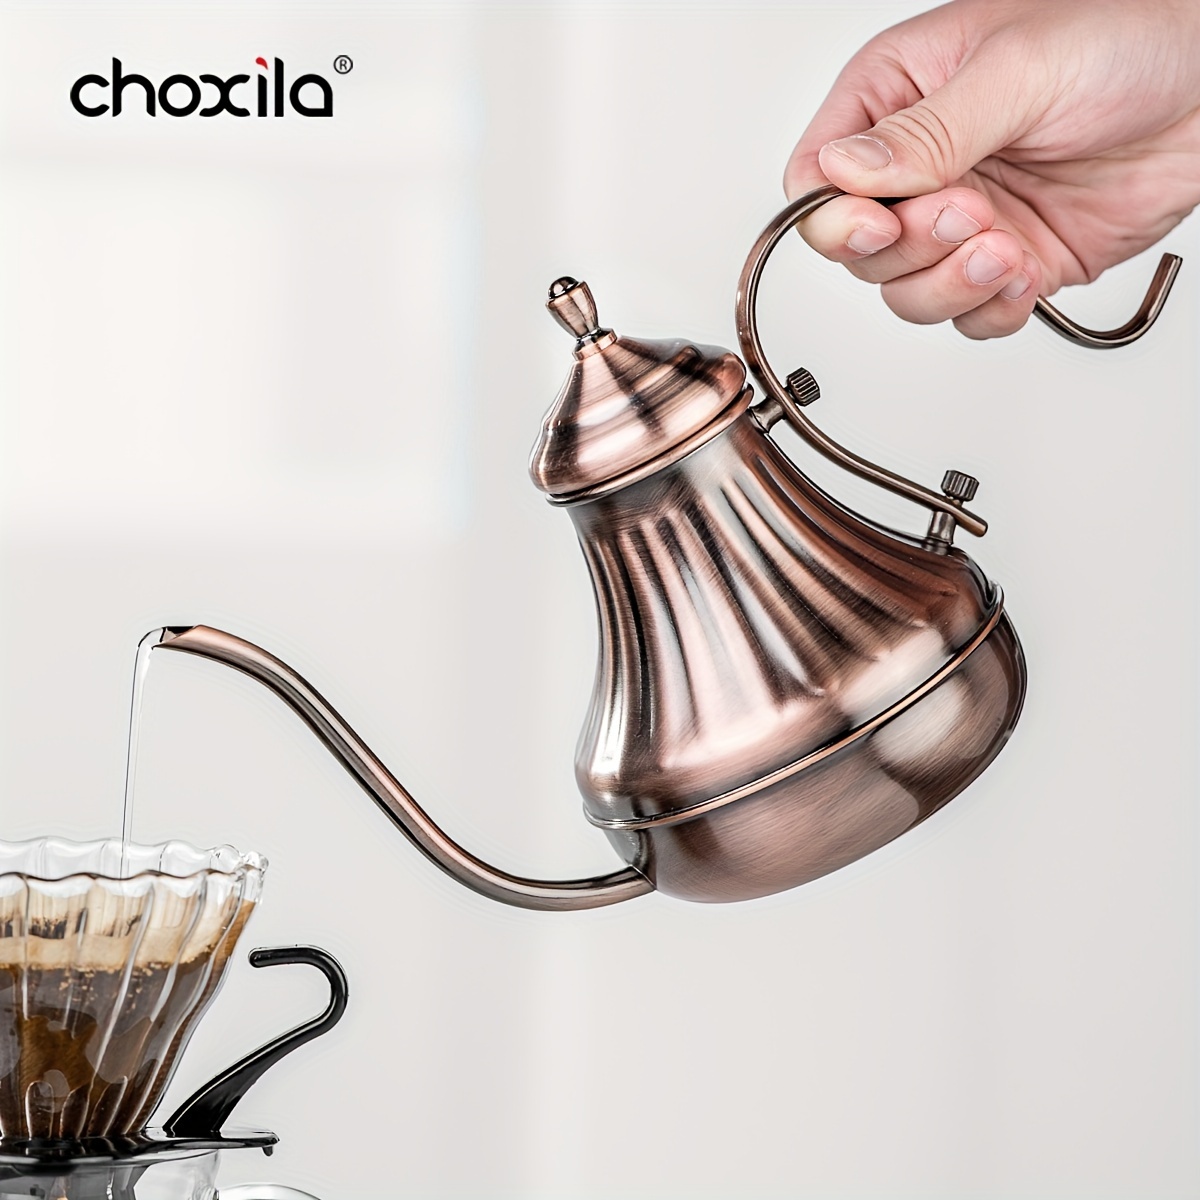 Coffee Pot Teapot Stainless Steel Tea Kettle Cold Short Spout  Pour Over for Home Kitchen Hotel Restaurant(20oz): Teapots